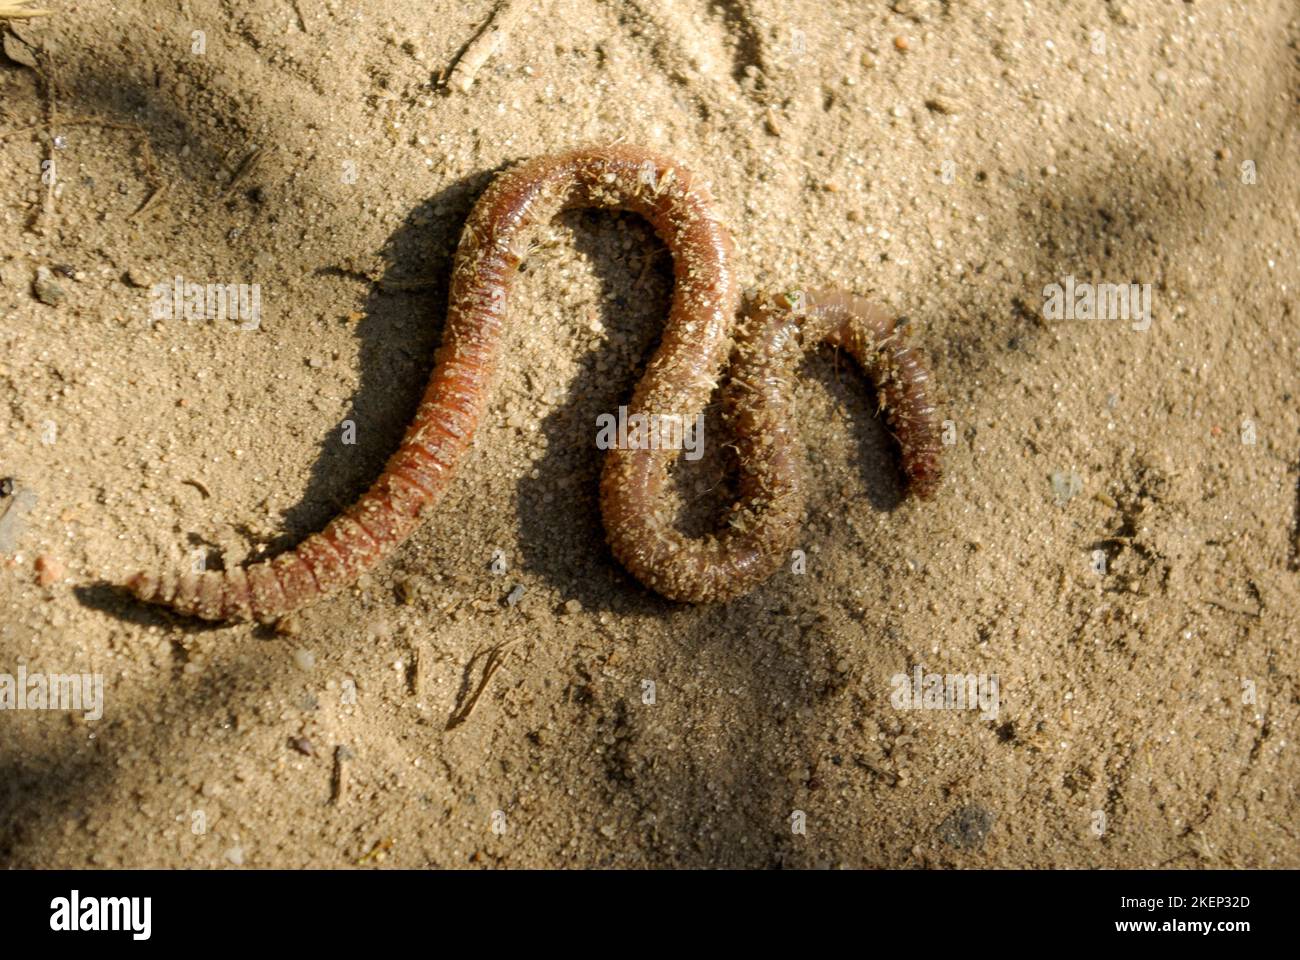 Worm in sand crawls Stock Photo